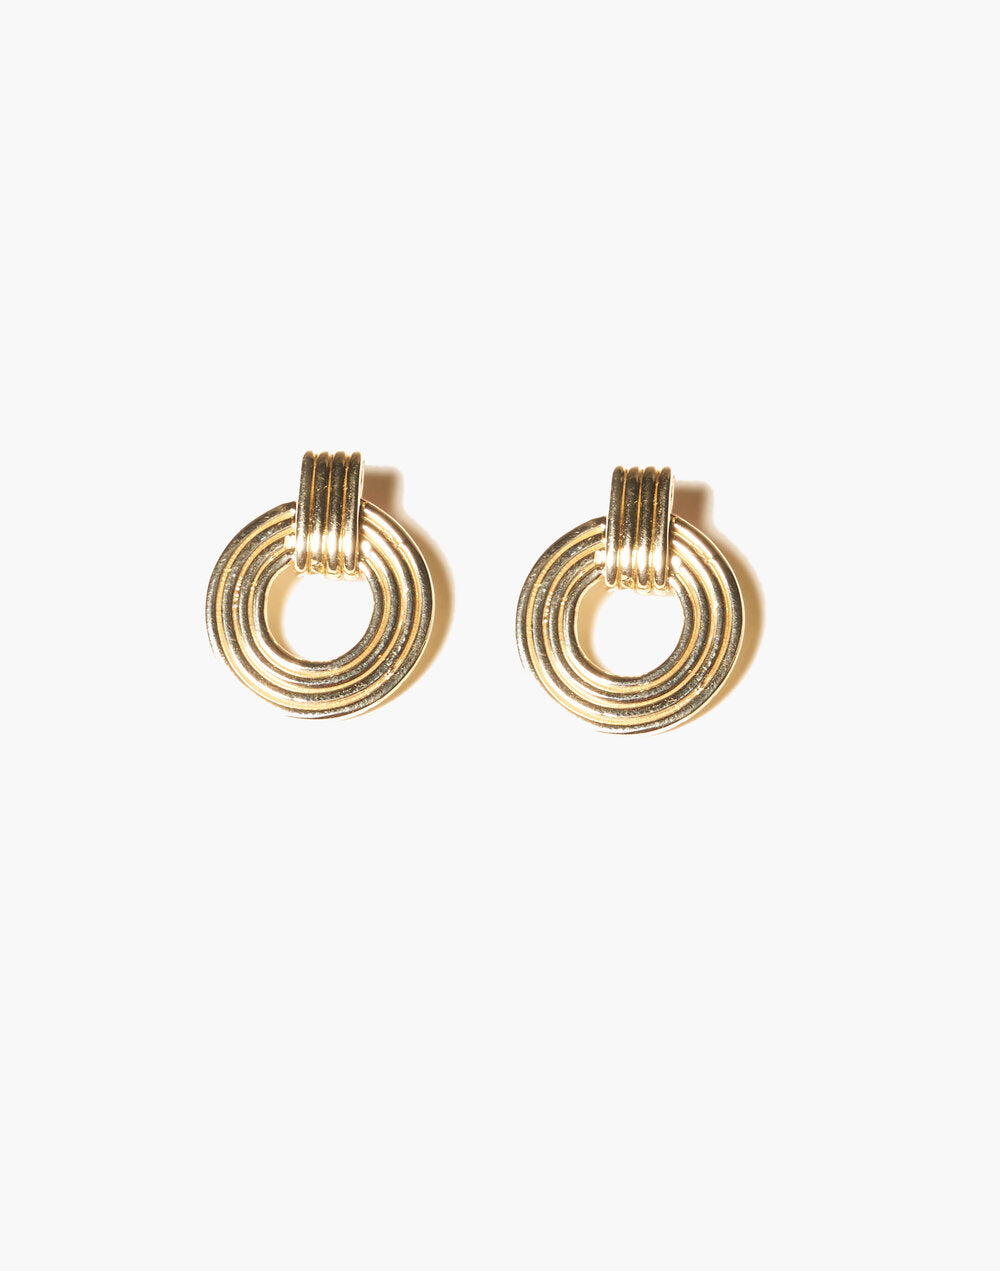 helios earrings